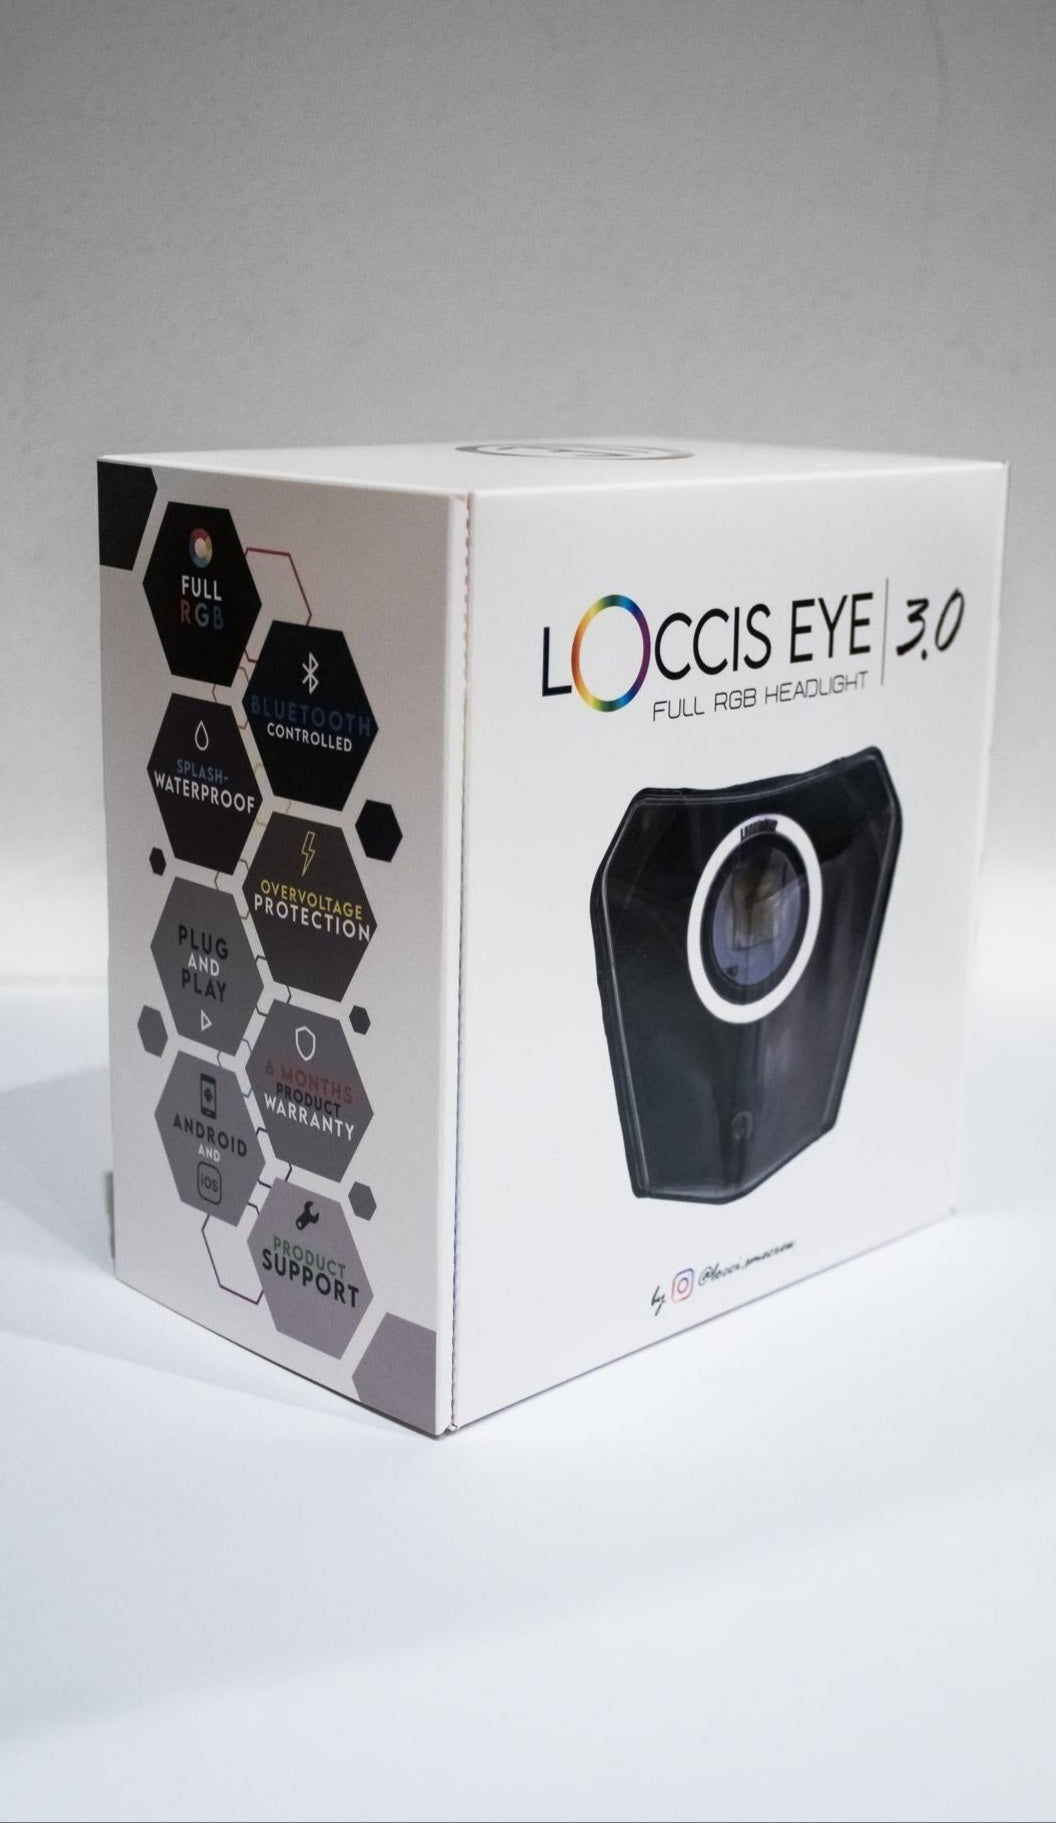 Loccis eye 3.0 RGB